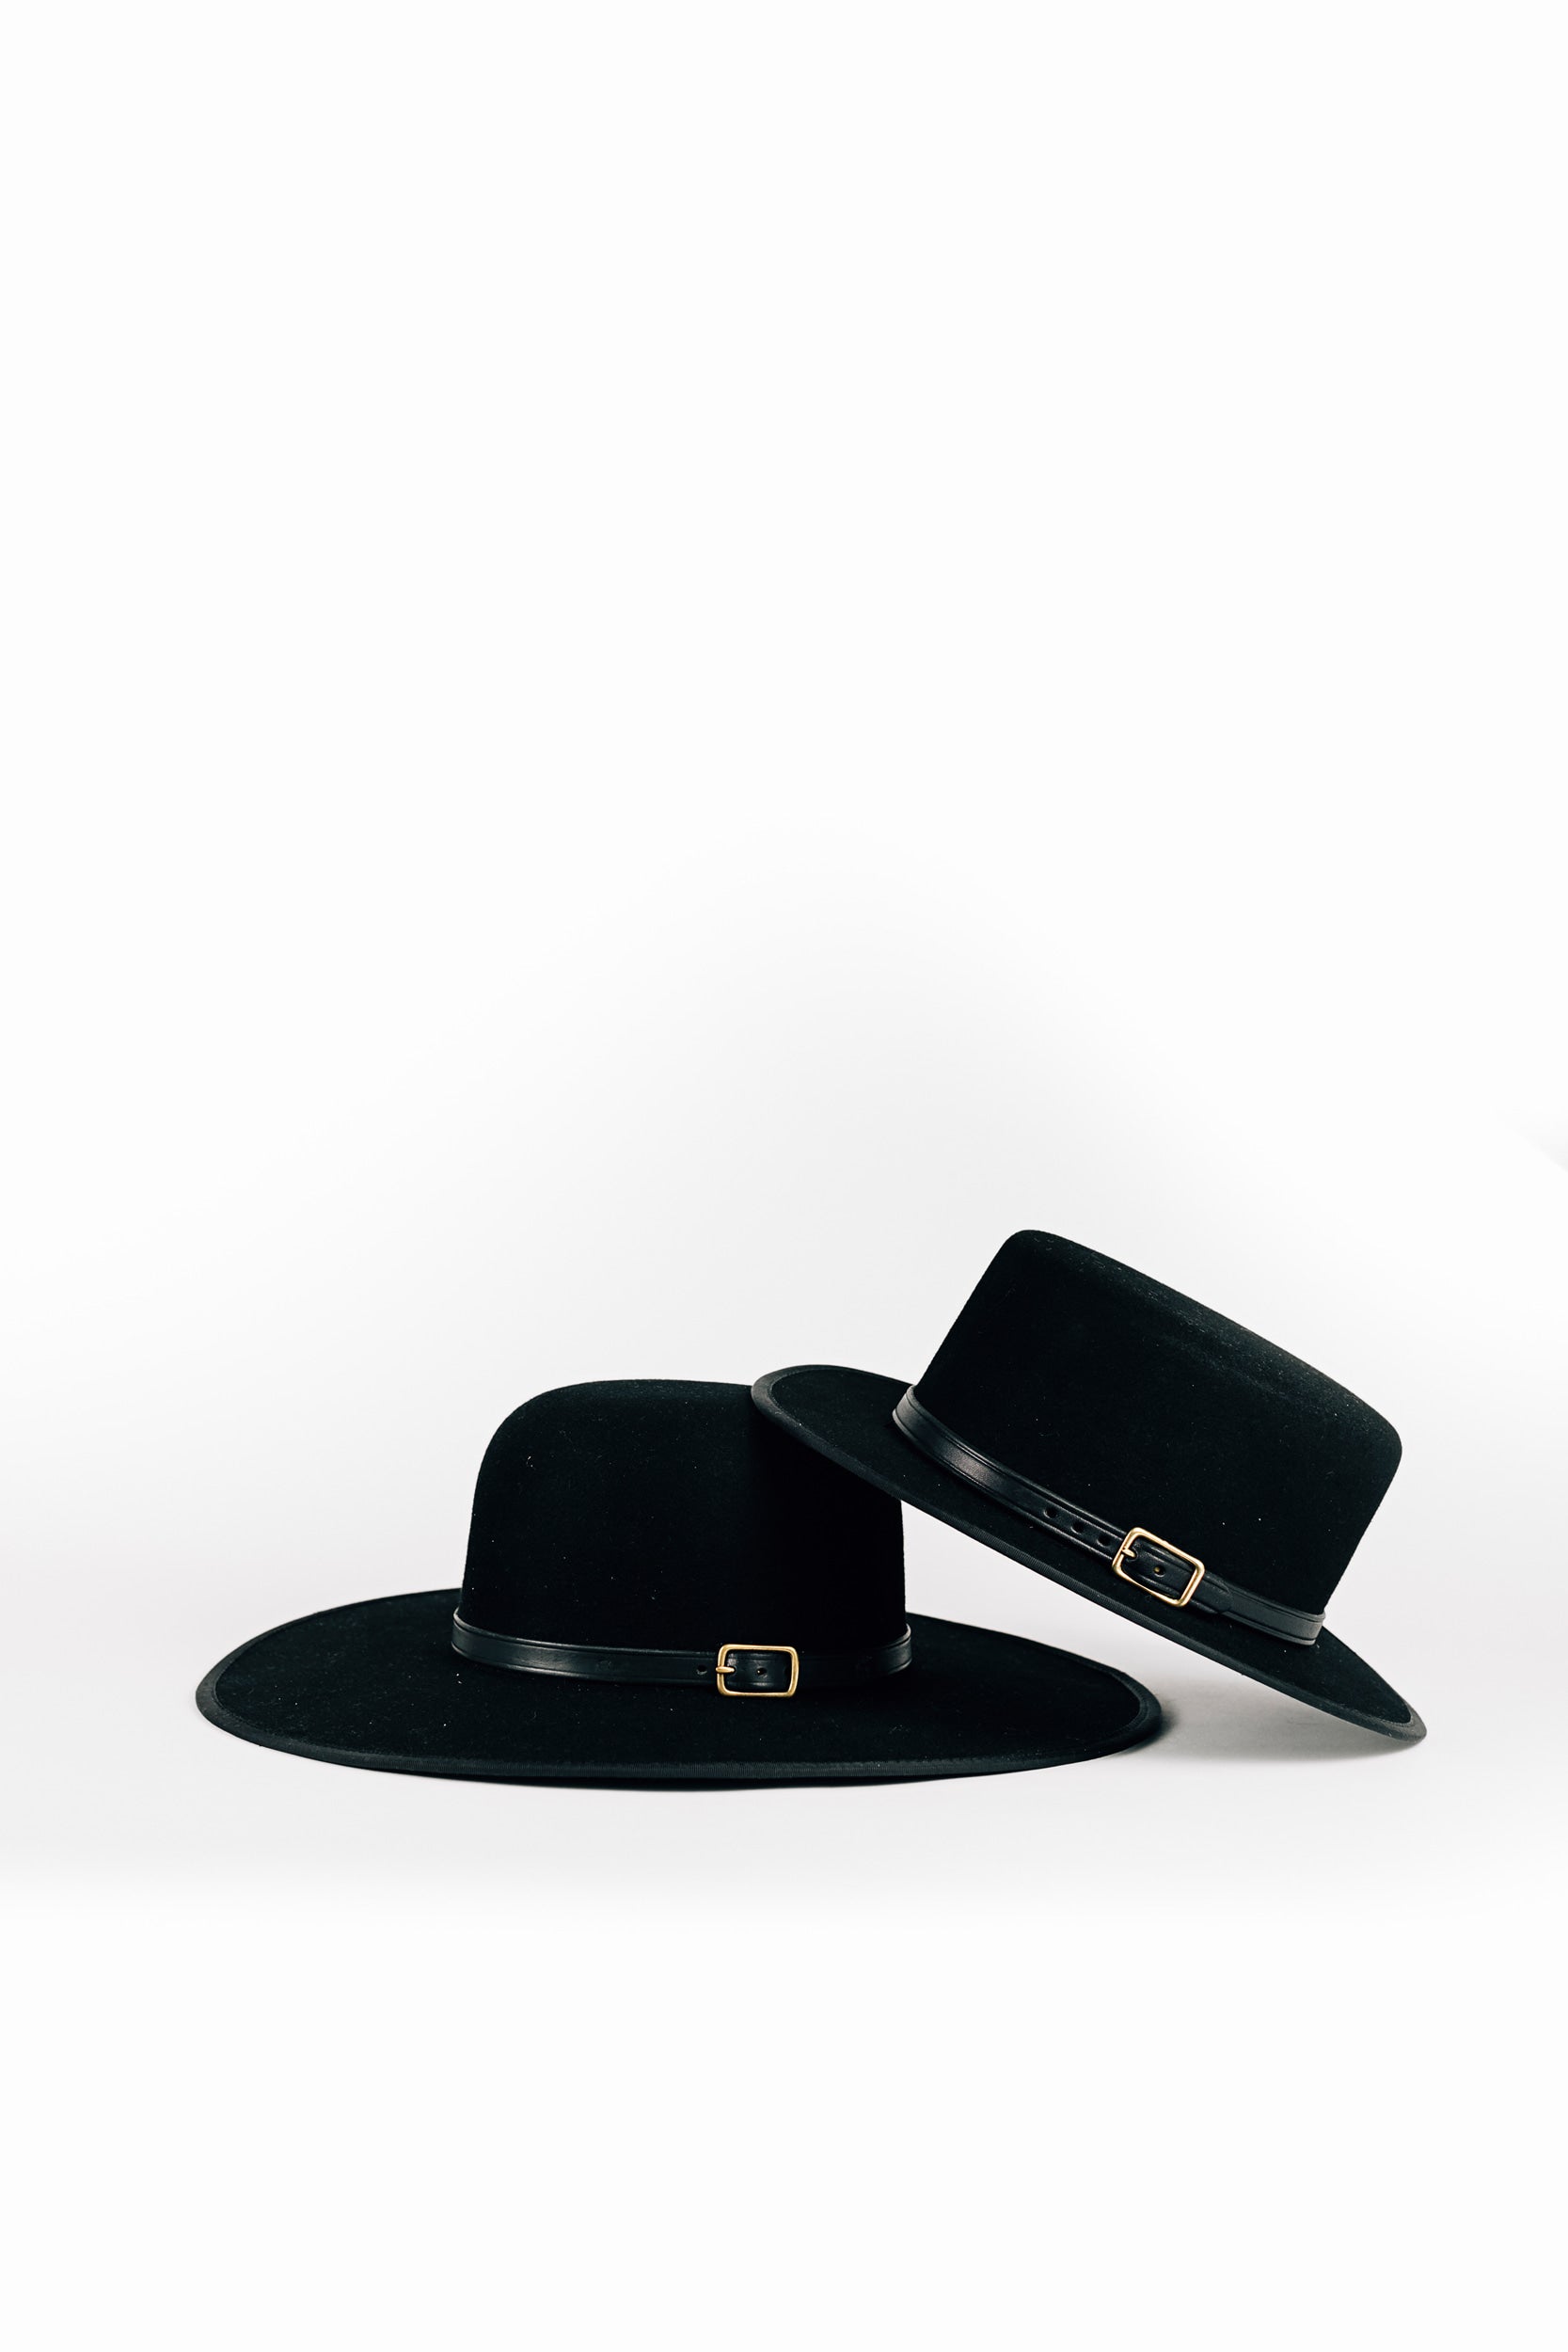 Two Child's Black Saddle Hats